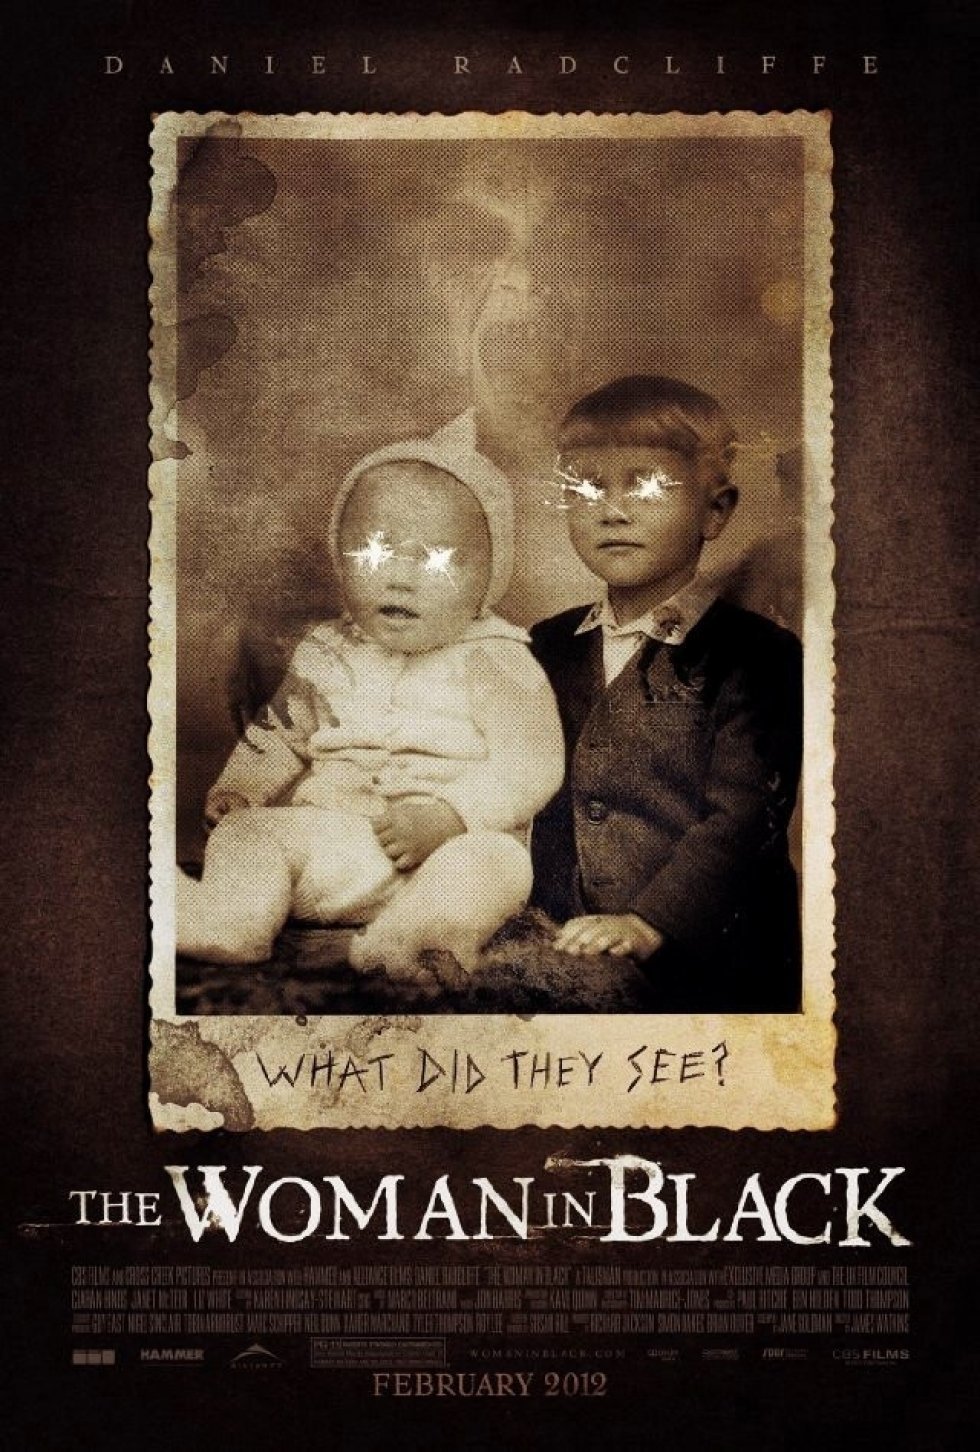 SF FIlm - The Woman in Black - Old school spøgelseshistorie